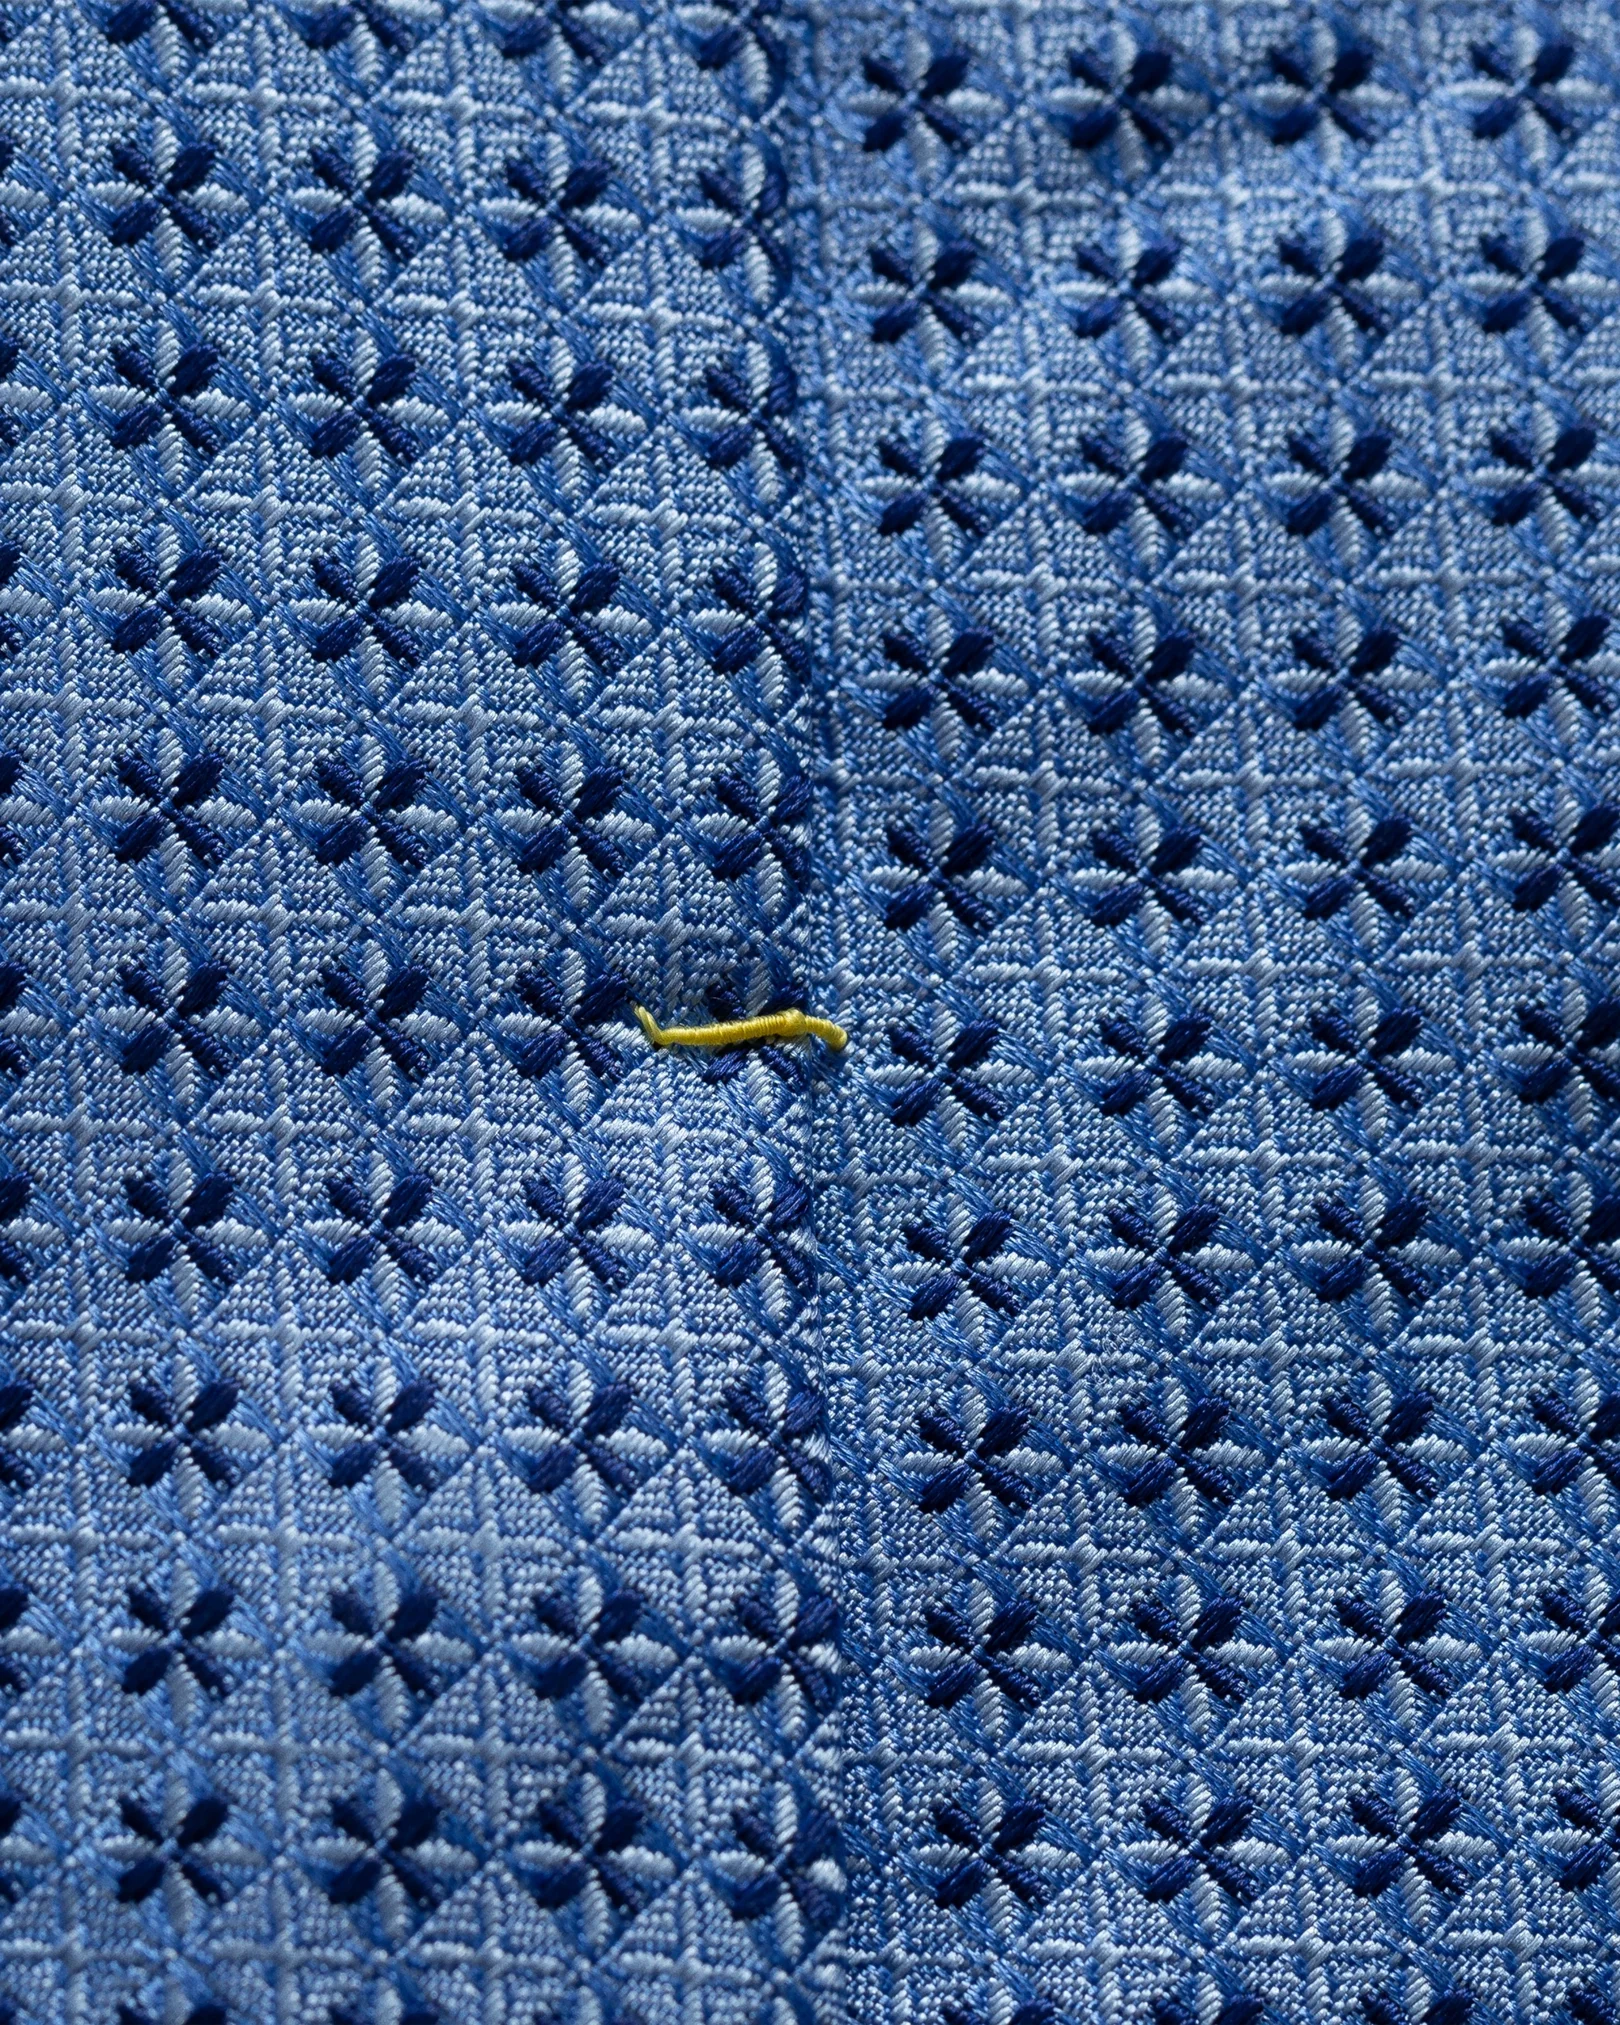 Eton - blue floral geometric tie